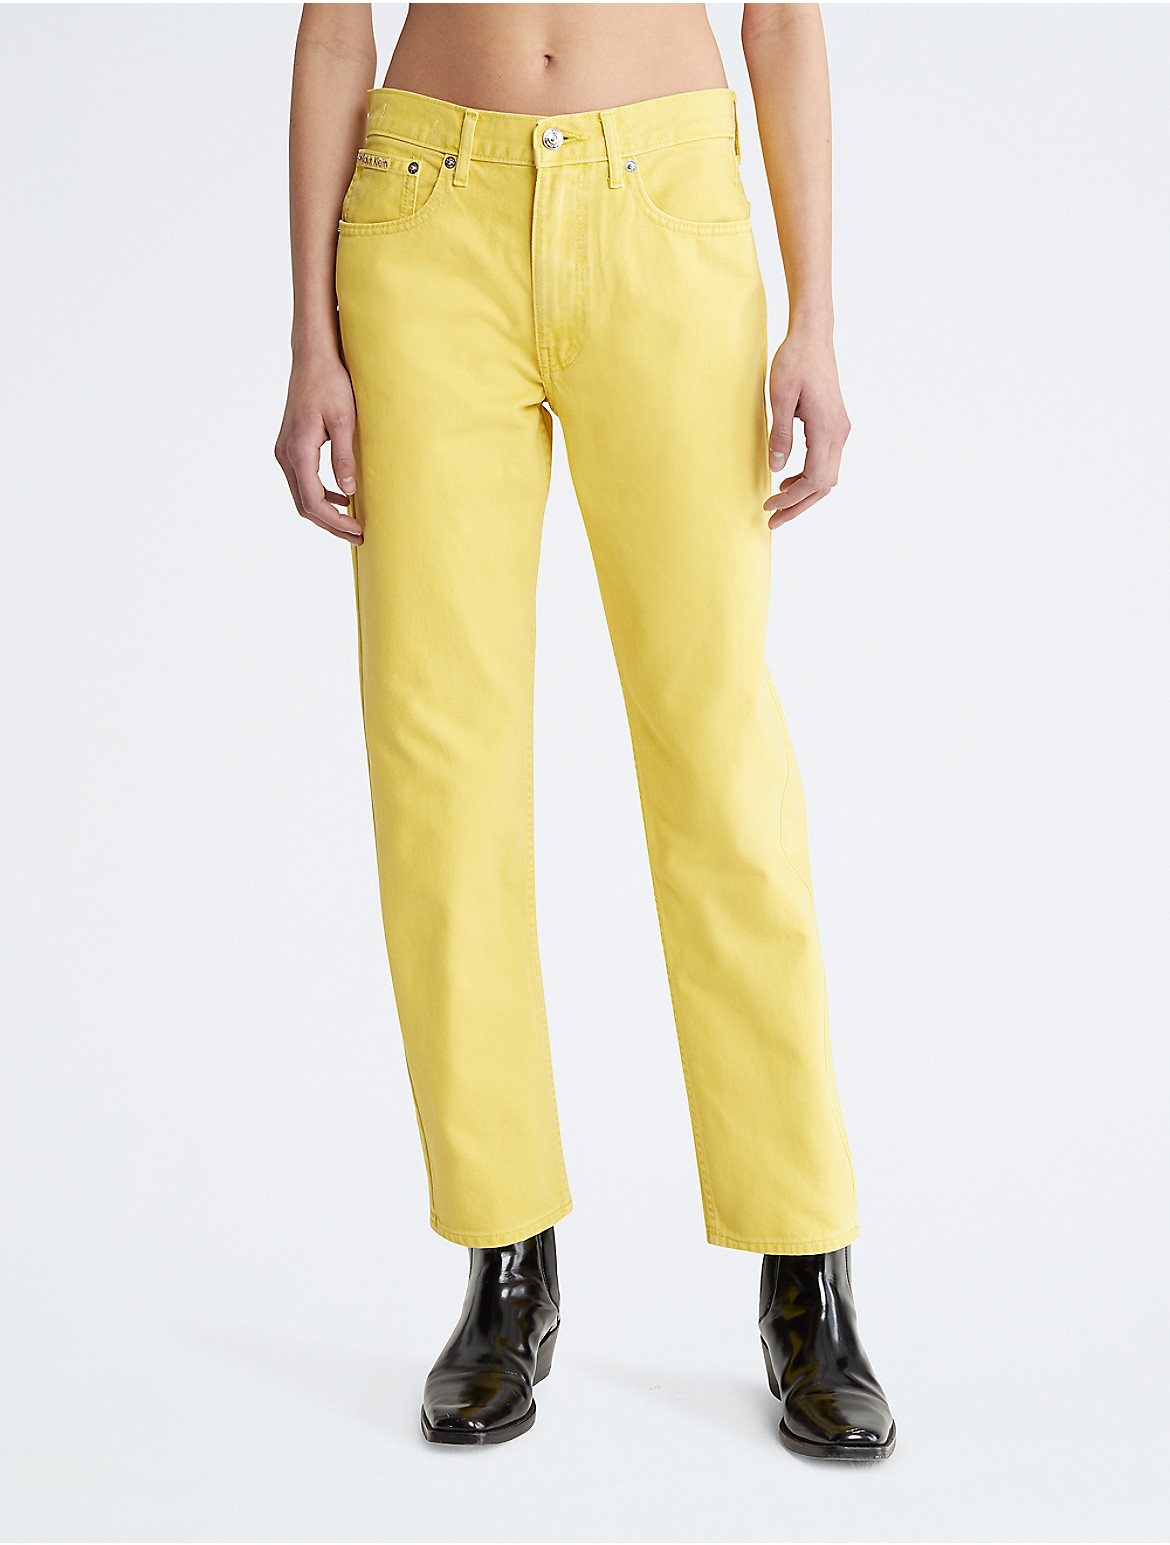 Calvin Klein Women's Original Straight Jeans - Yellow - 25